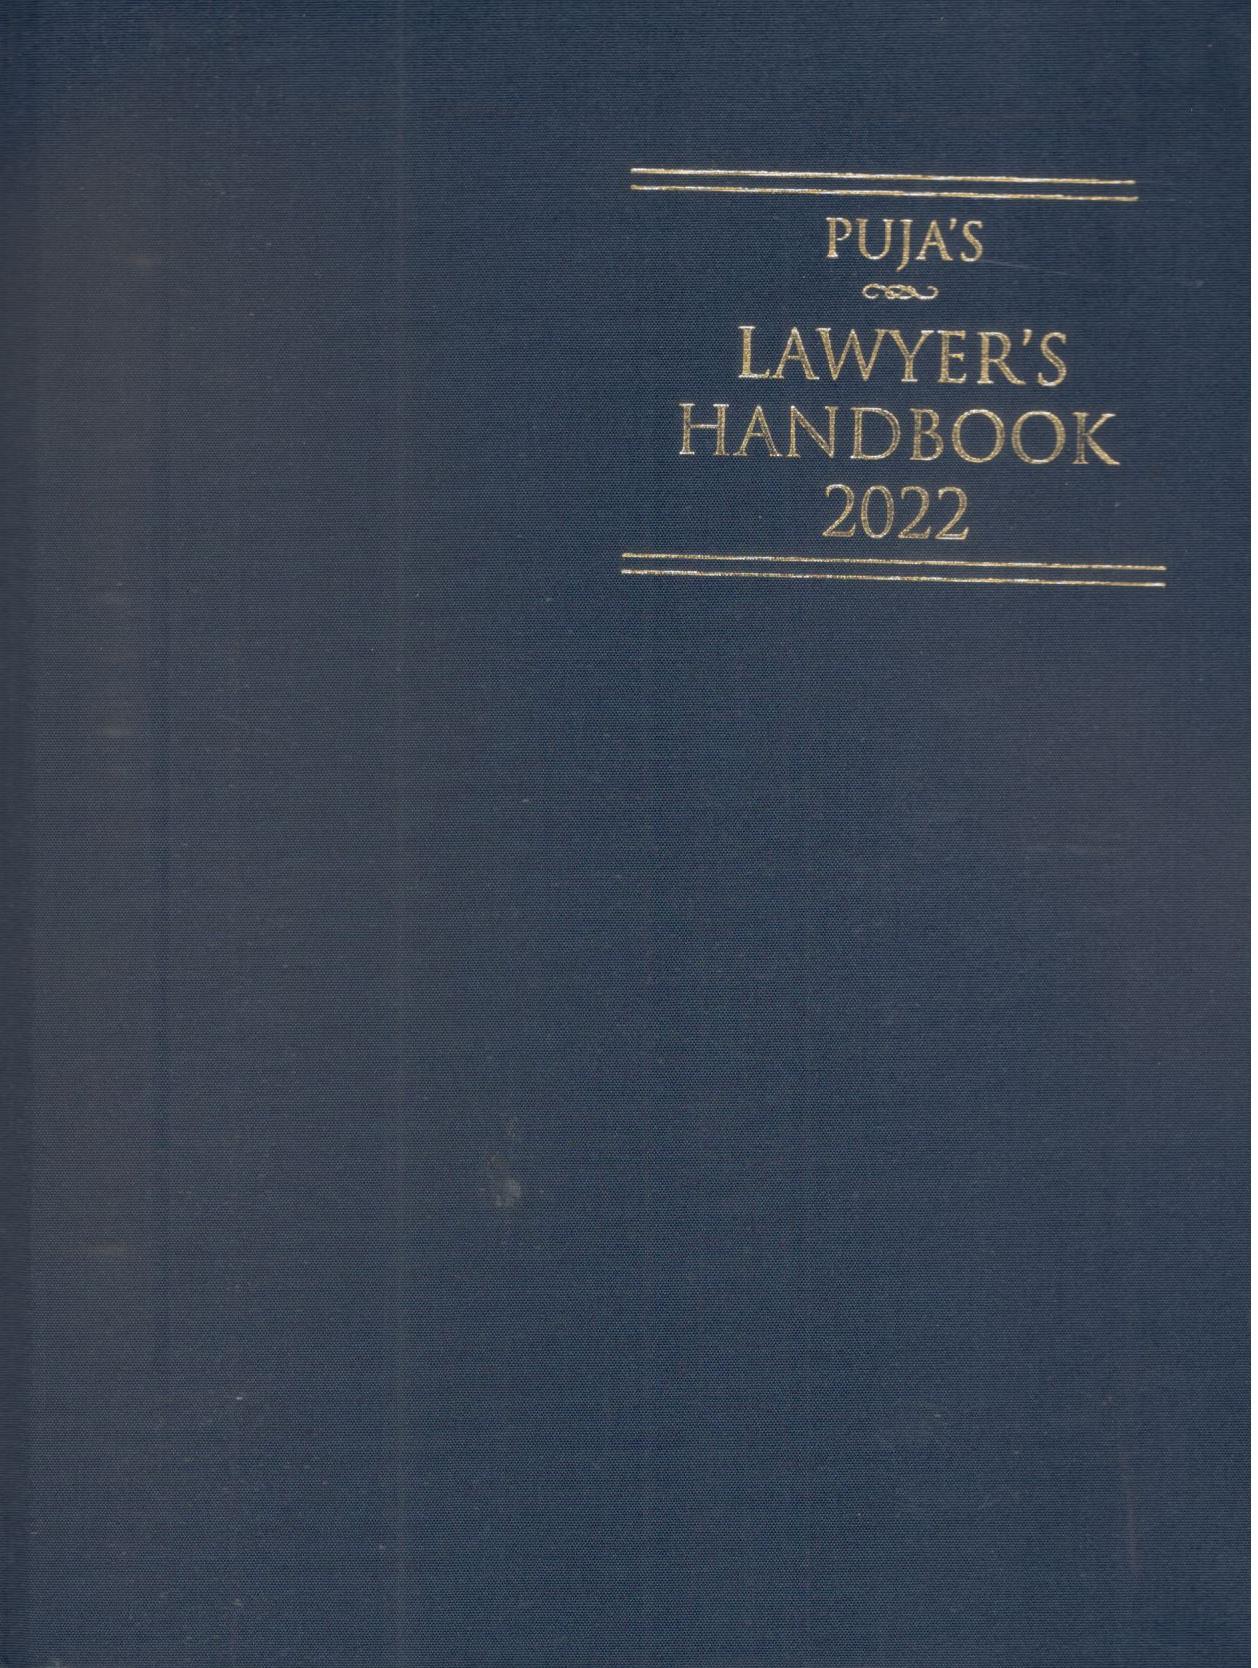 Puja’s Lawyer’s Handbook 2022 - Blue Small Size Regular Hardbound